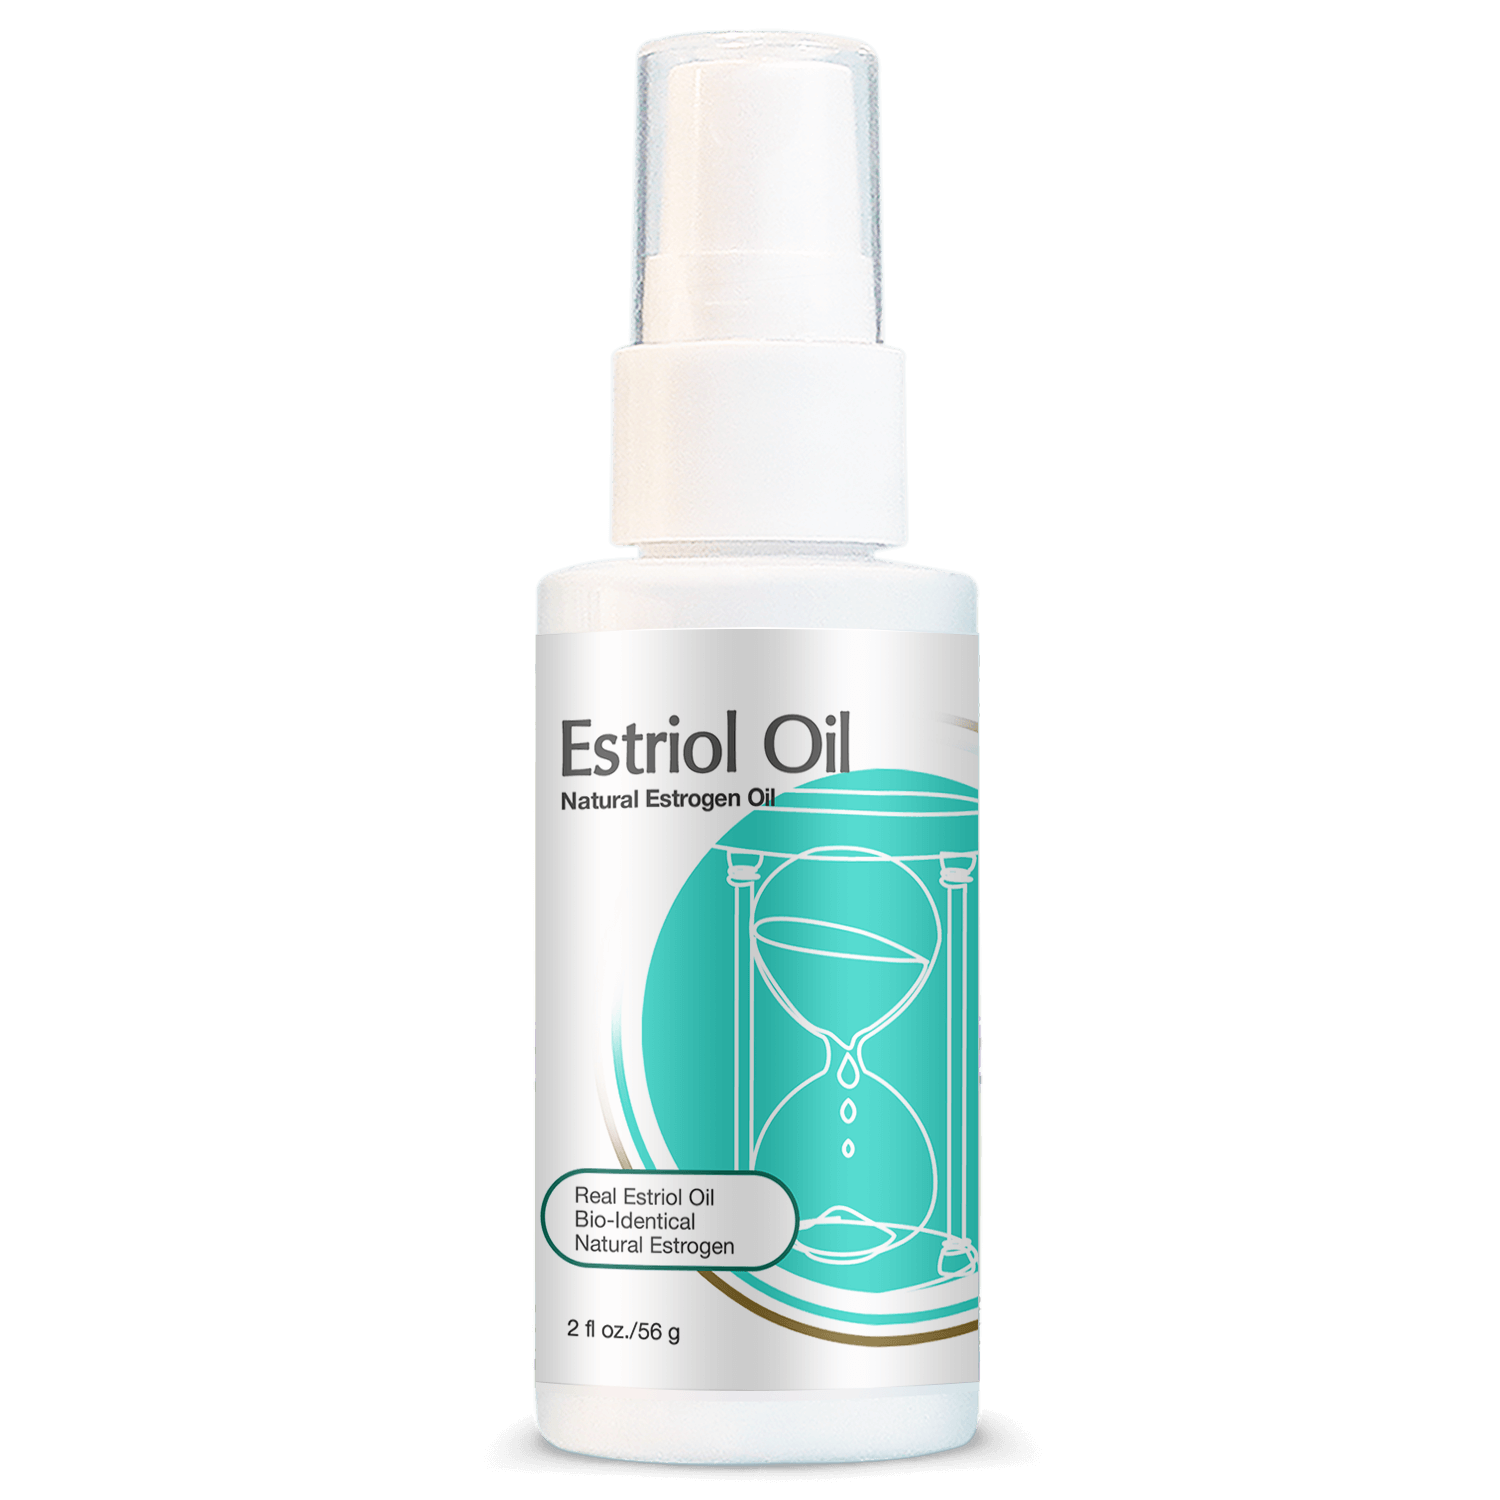 Estriol Oil Natural Estrogen Oil for Menopausal Symptom Relief